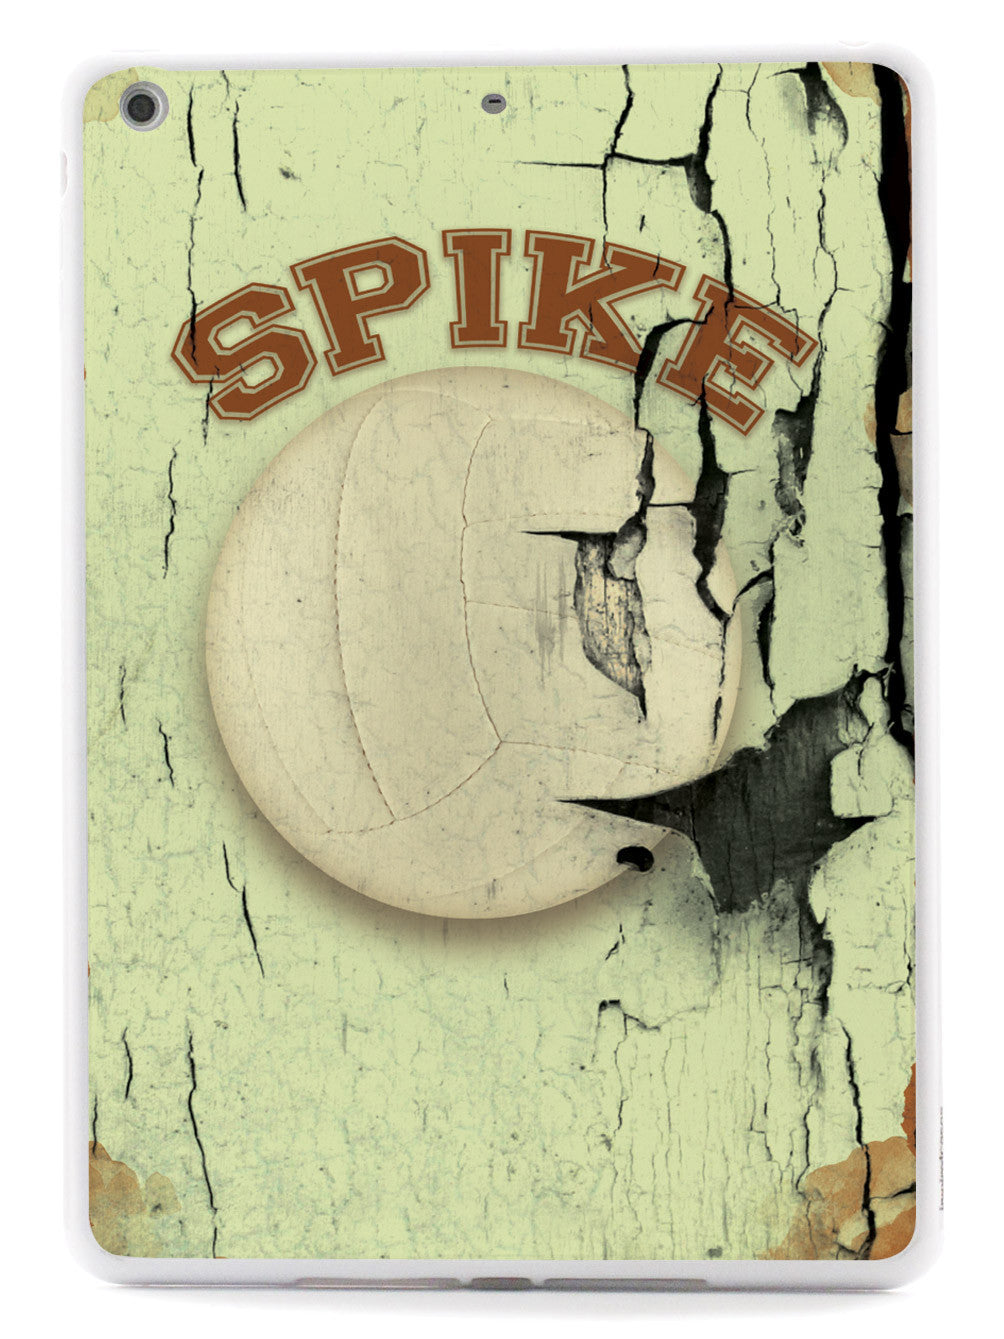 Spike! - Volleyball Case